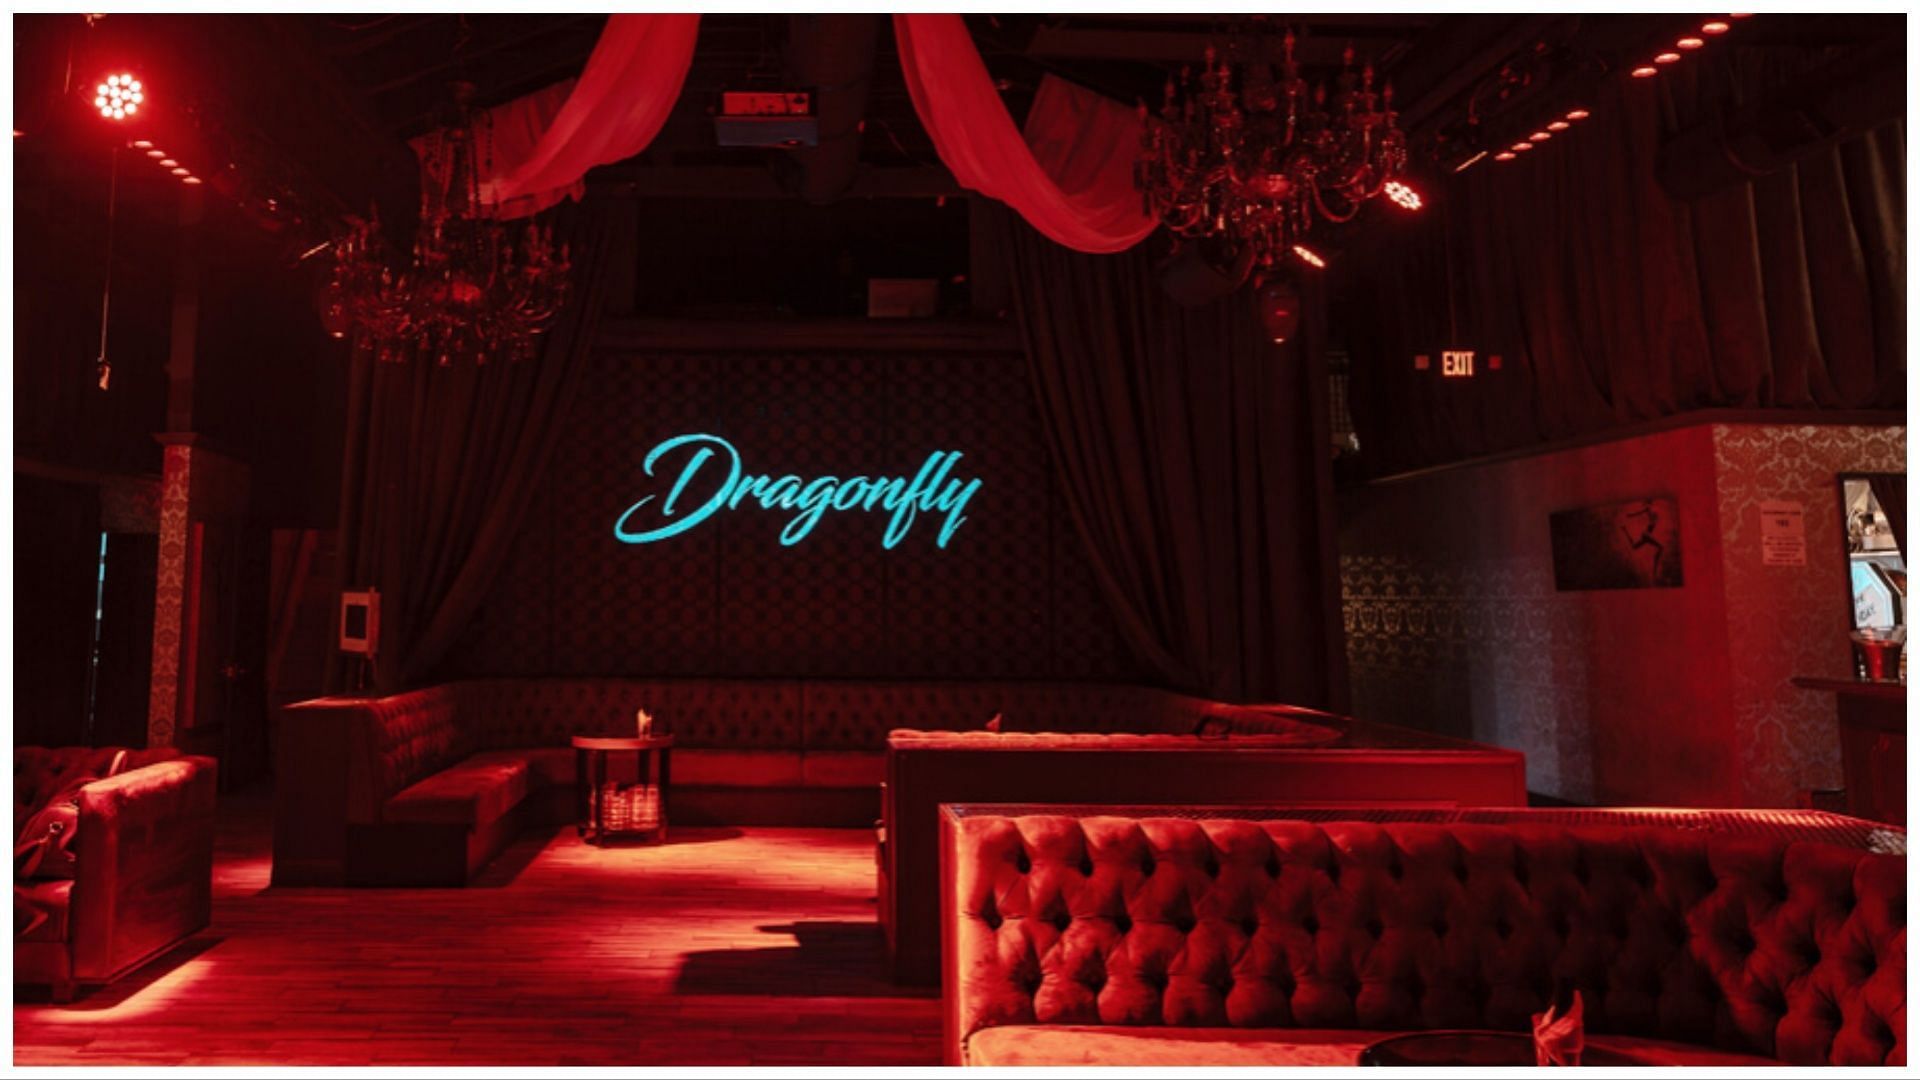 (images via Dragonfly Hollywood Nightclub)